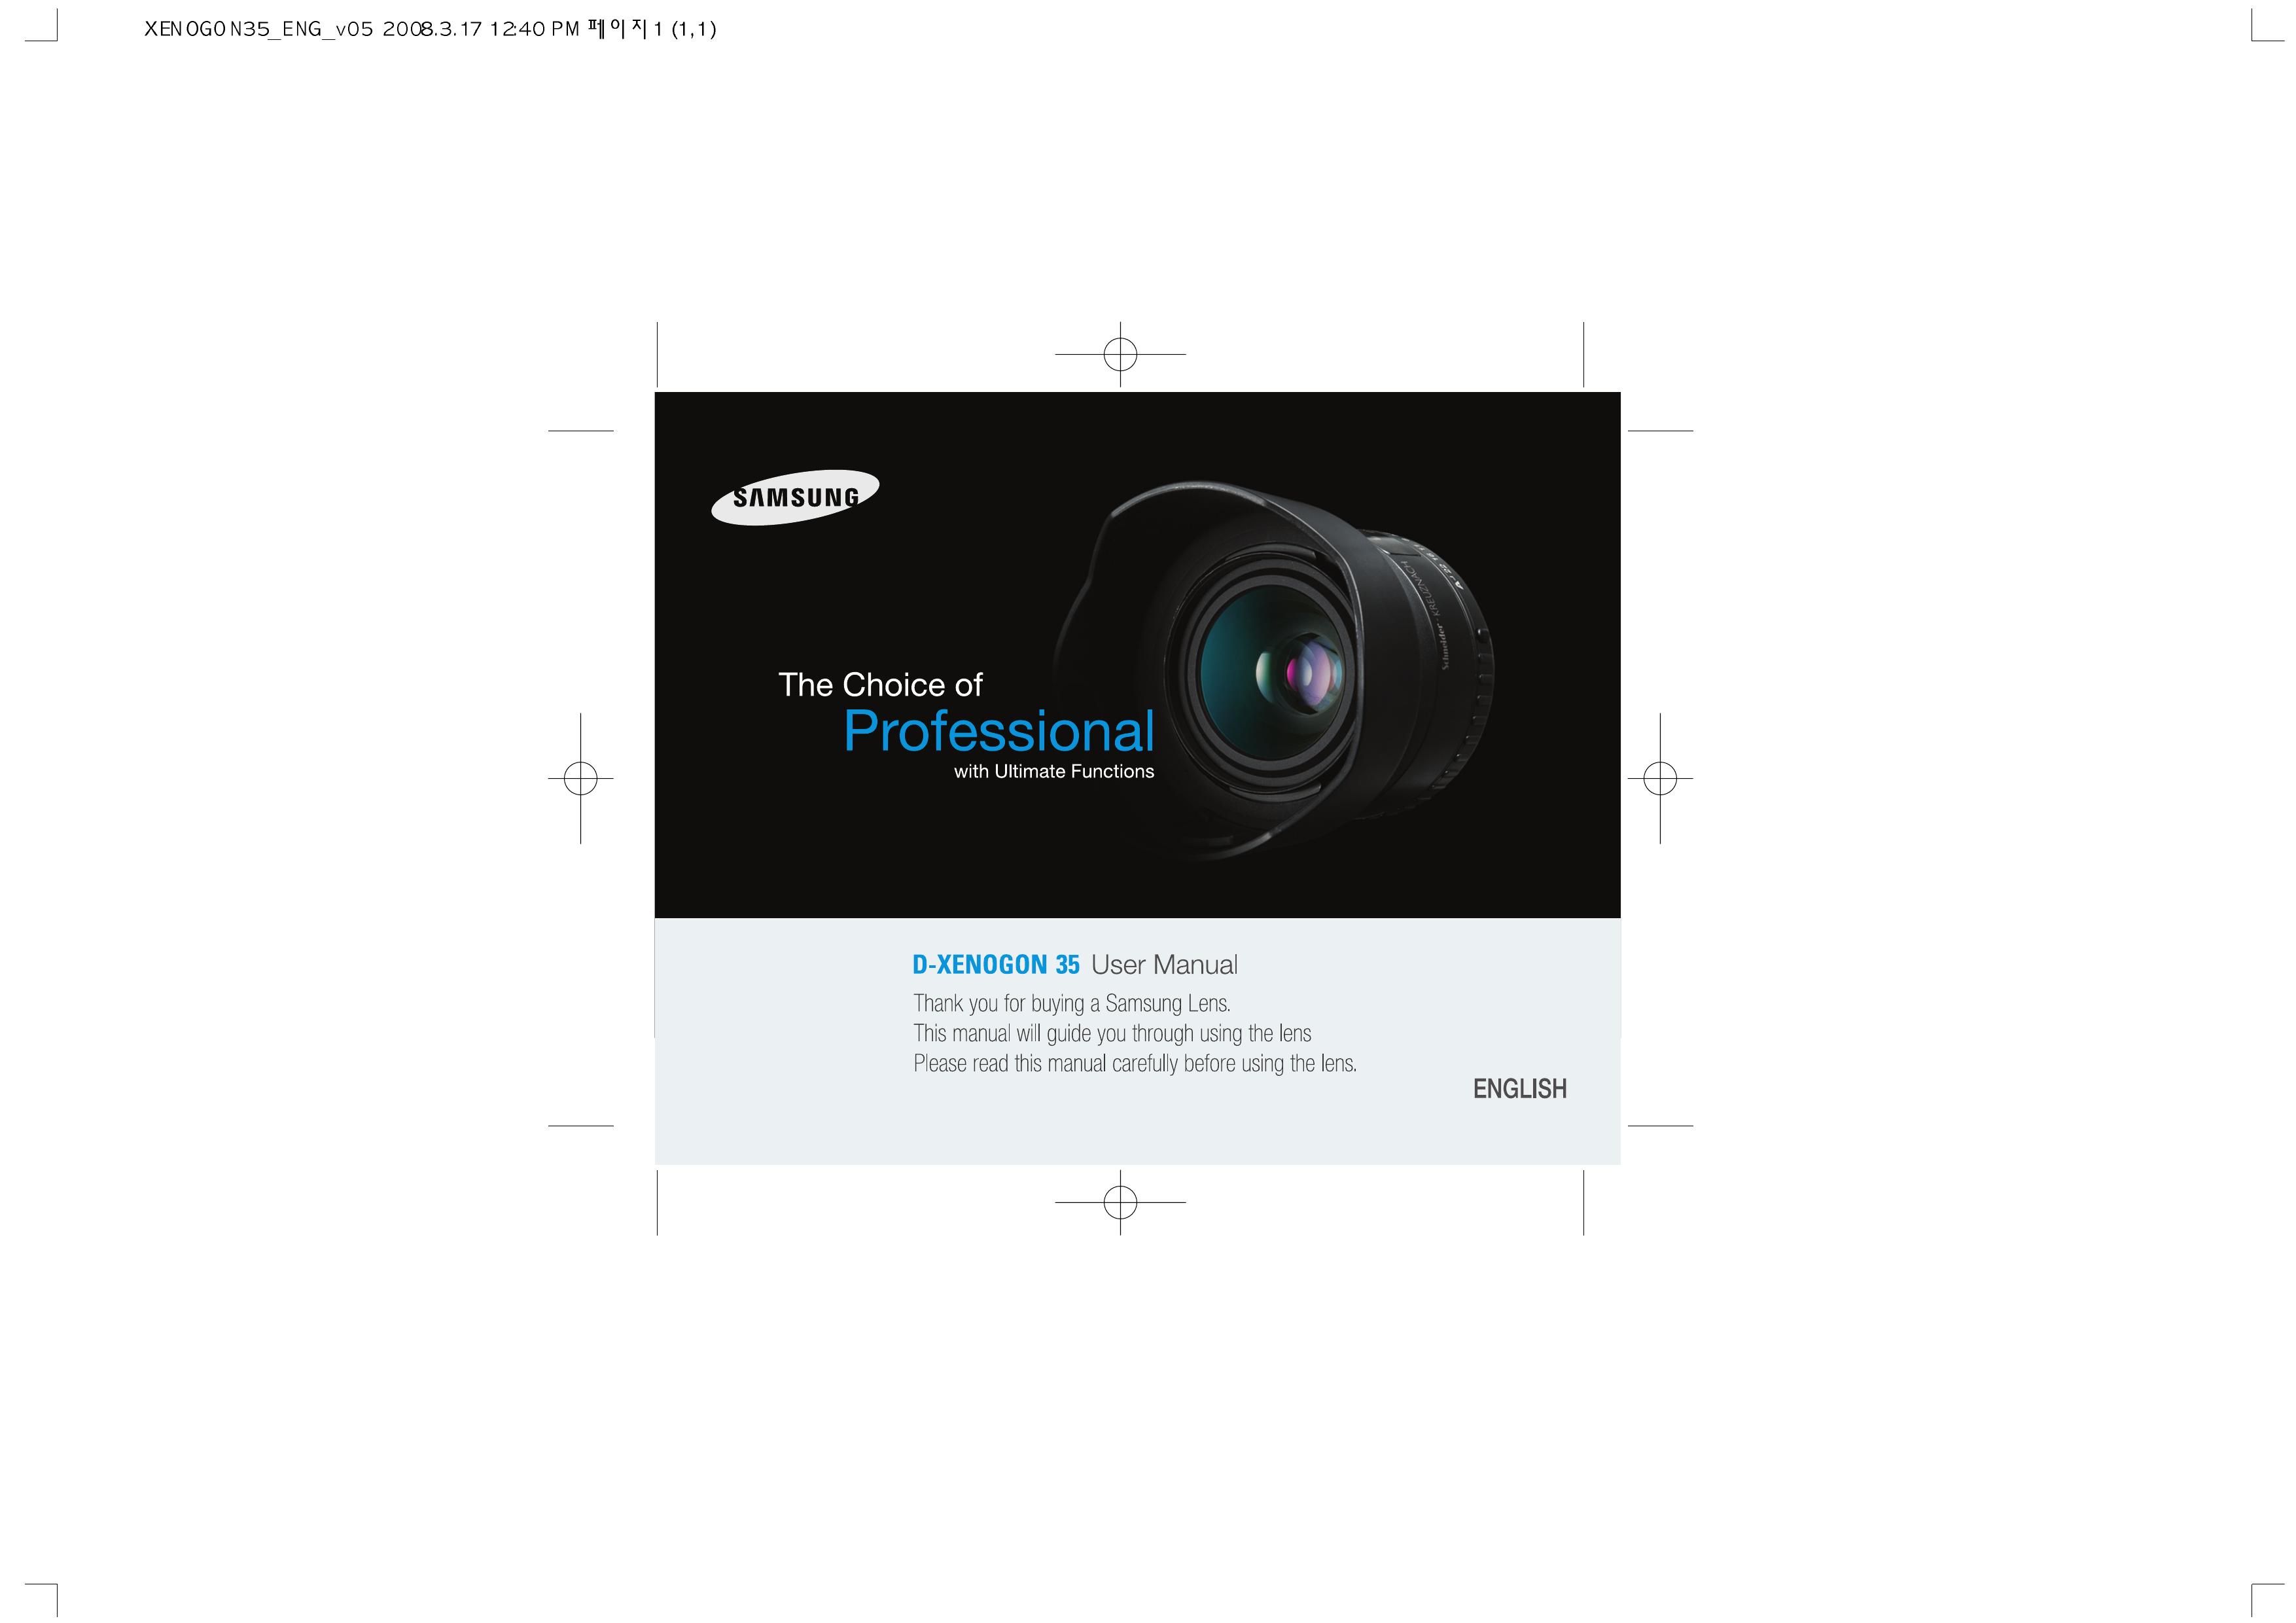 Samsung D-XENOGON 35 Camera Lens User Manual